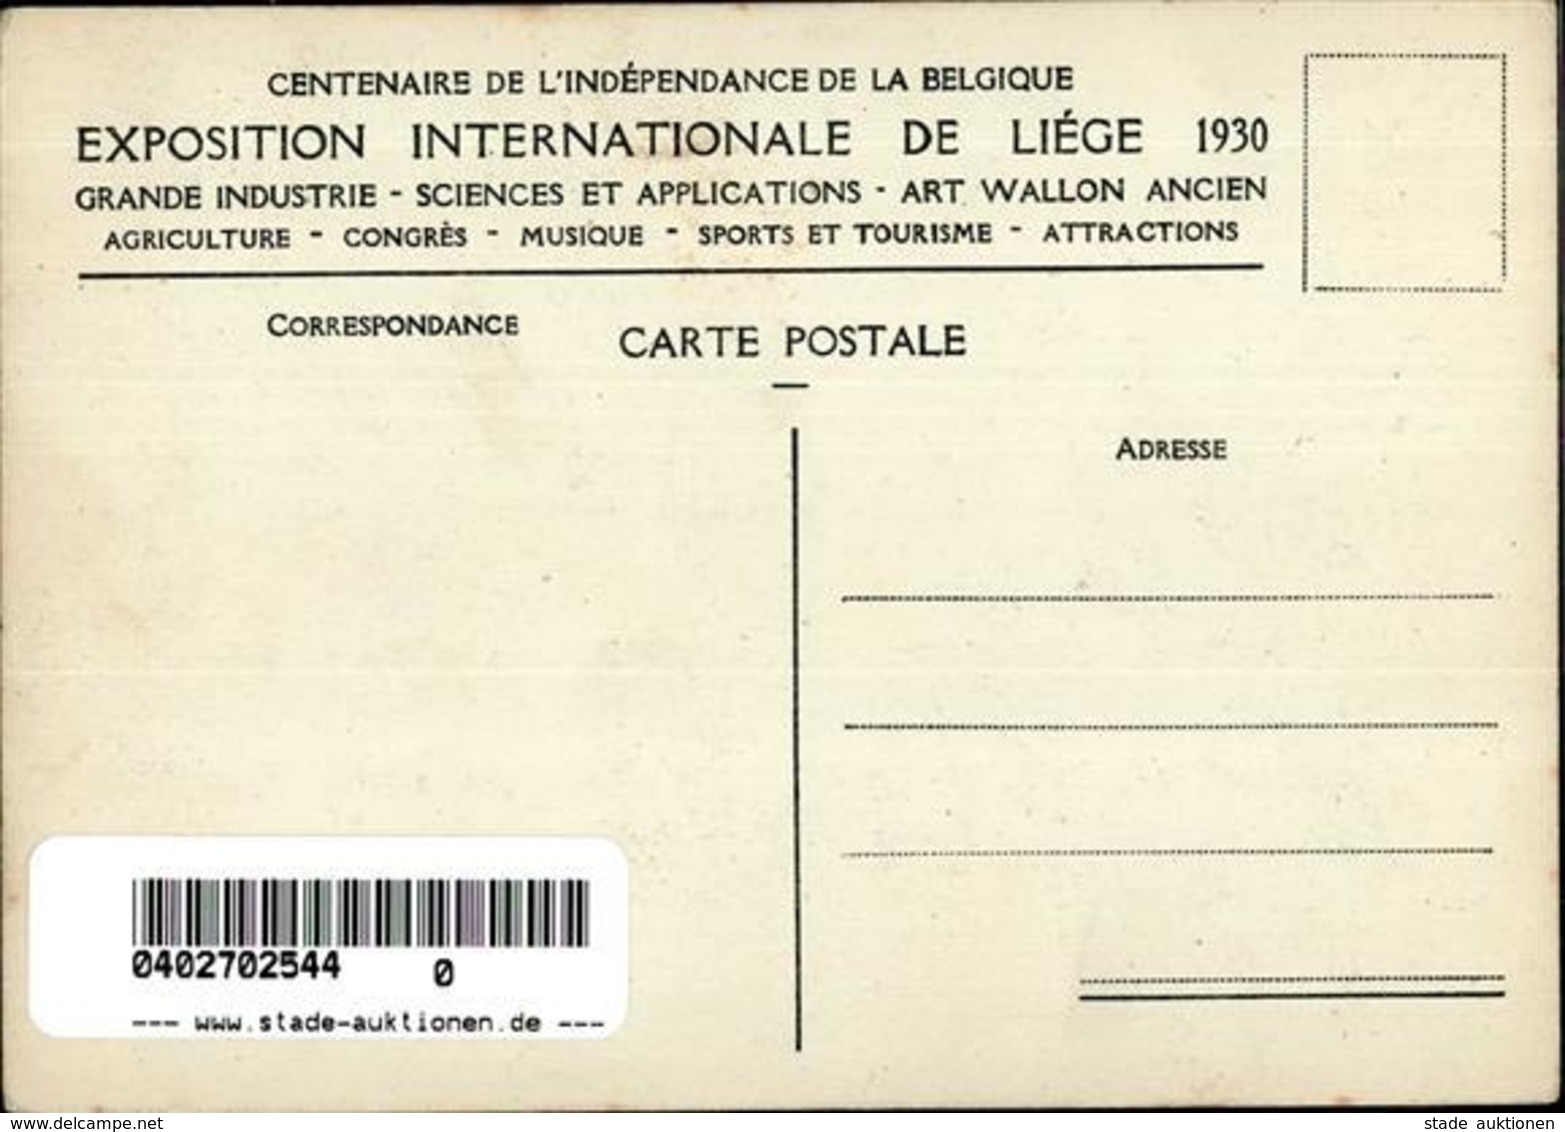 Ausstellung Palais De La France Künstlerkarte I-II Expo - Expositions